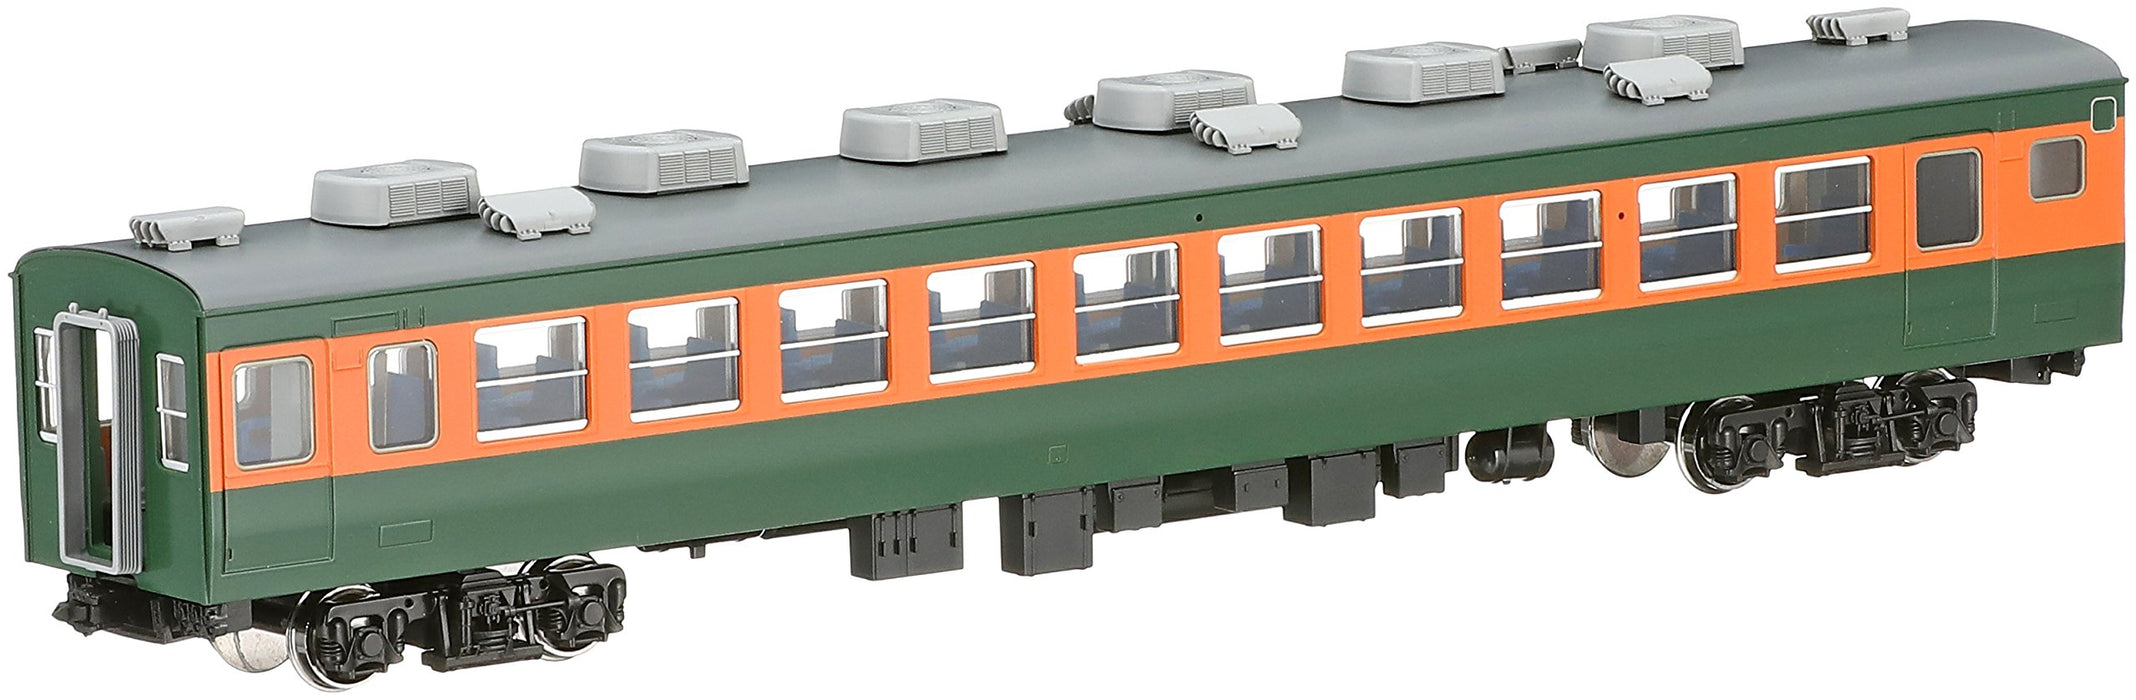 Tomytec Tomix Ho Gauge Saha153 200 Refrigerated Model Railway Train HO-266